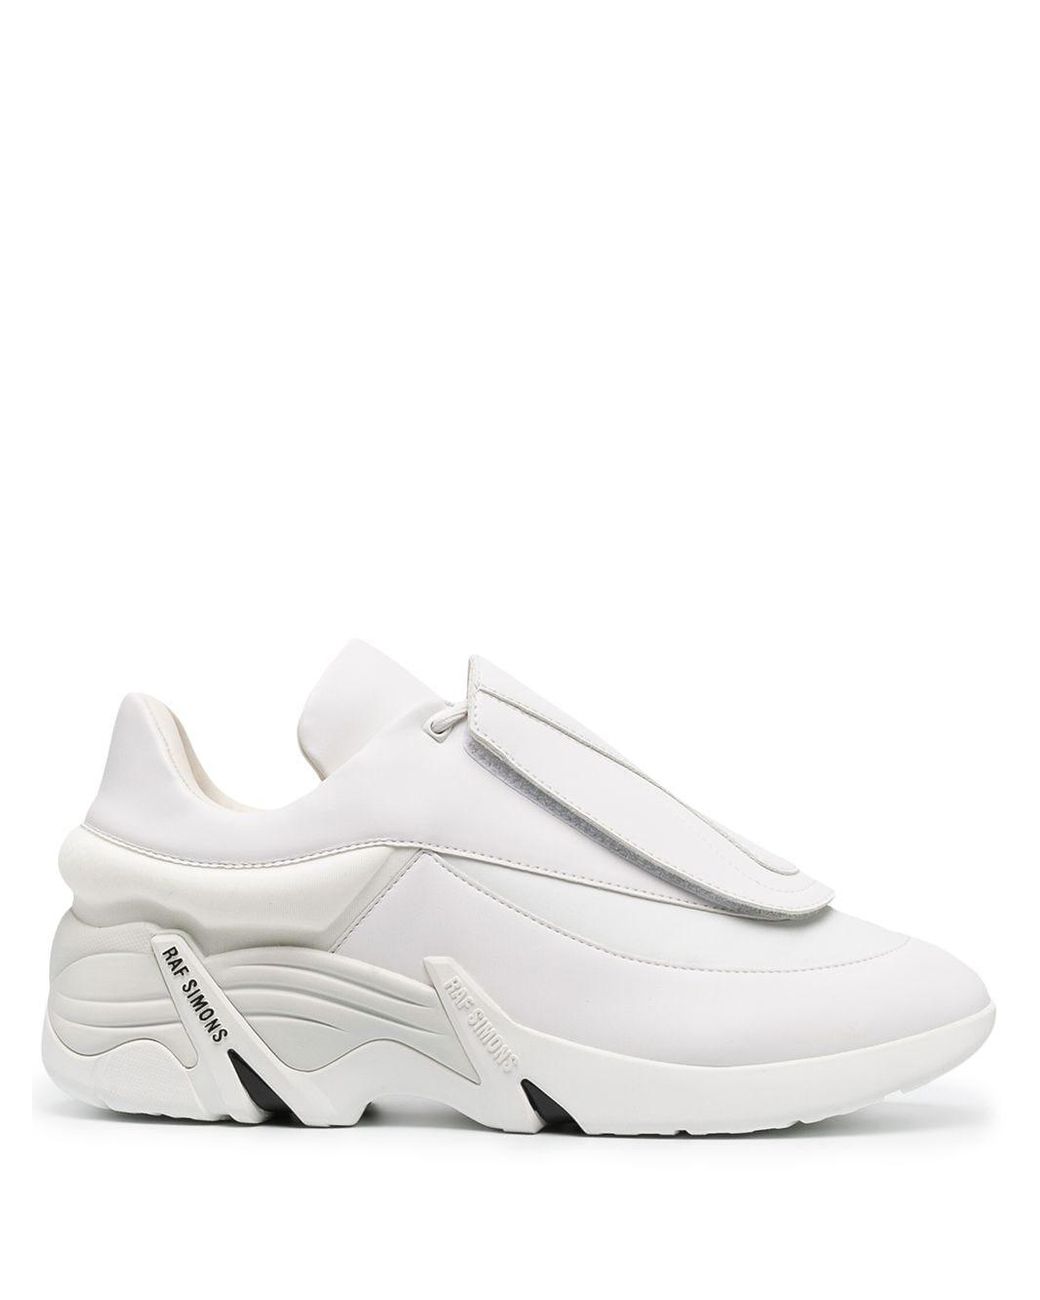 Raf Simons Antei Sneakers in White for Men - Lyst